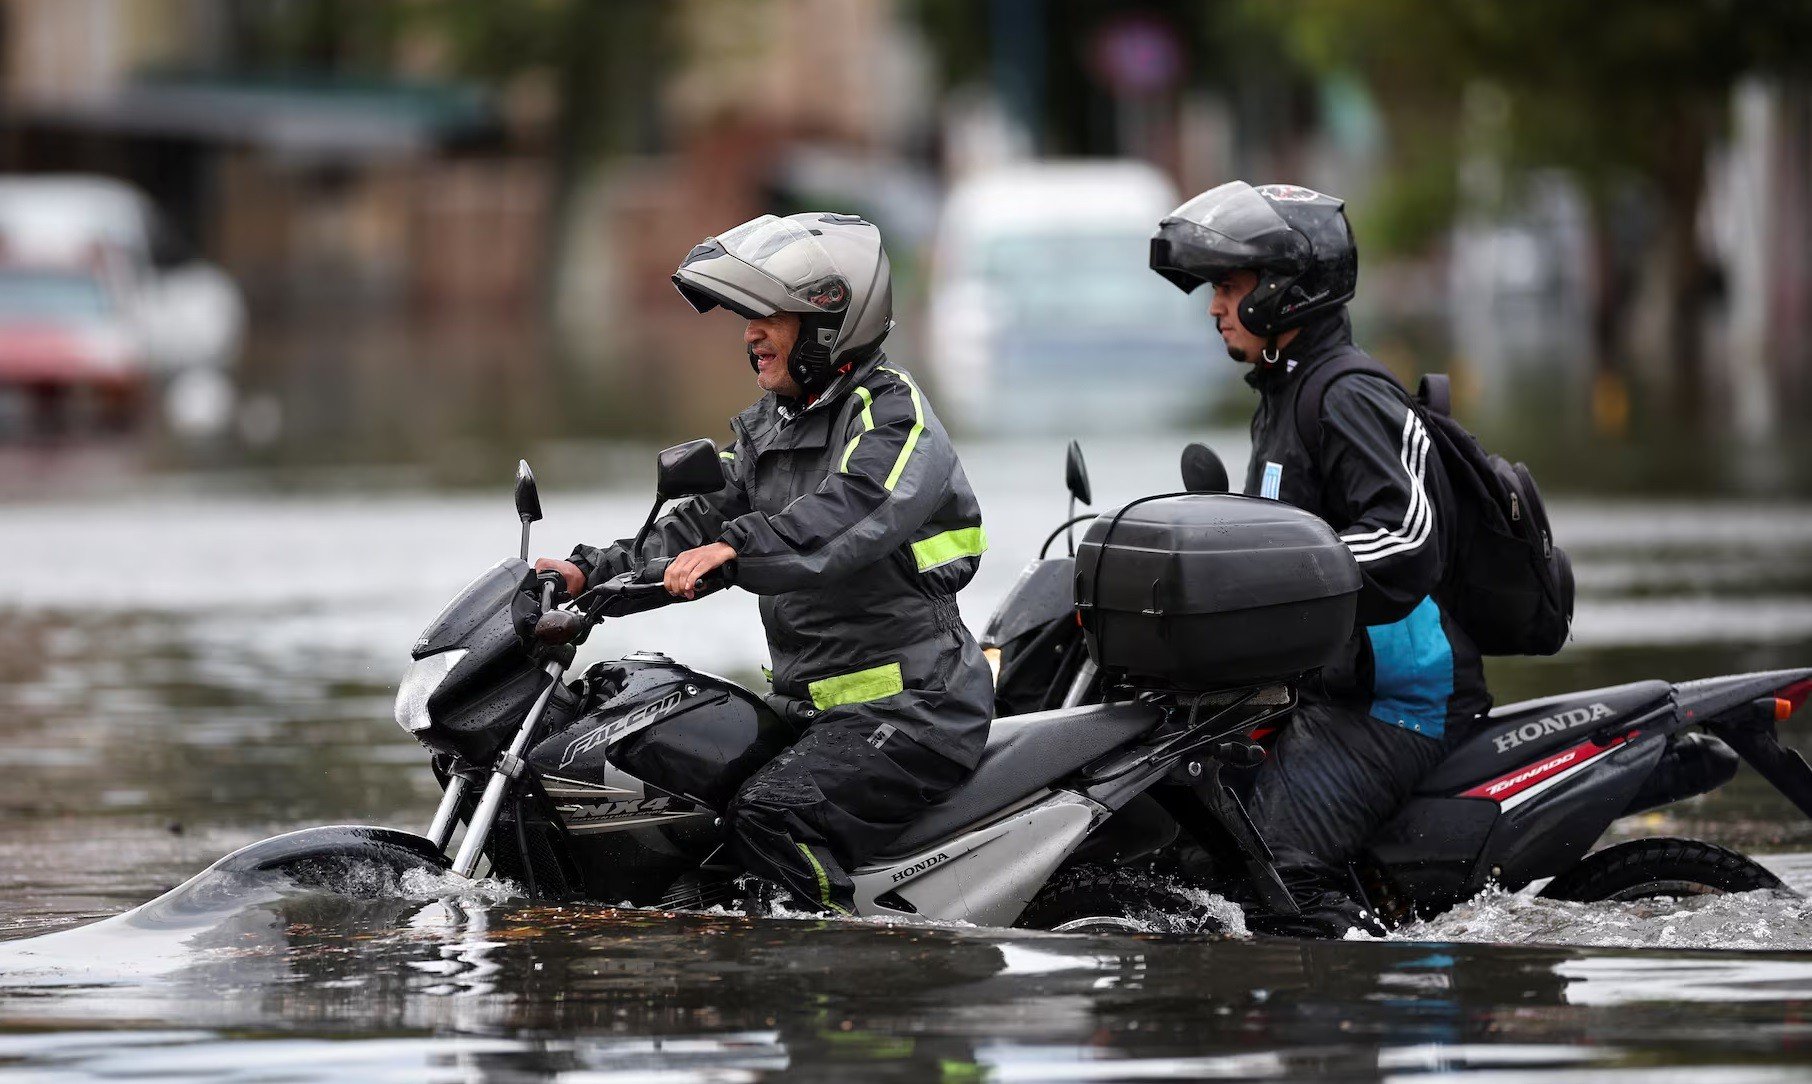 Berkendara Motor saat Hujan Deras, Waspada Bahaya Datang dari Sisi Kiri, Kanan dan Atas